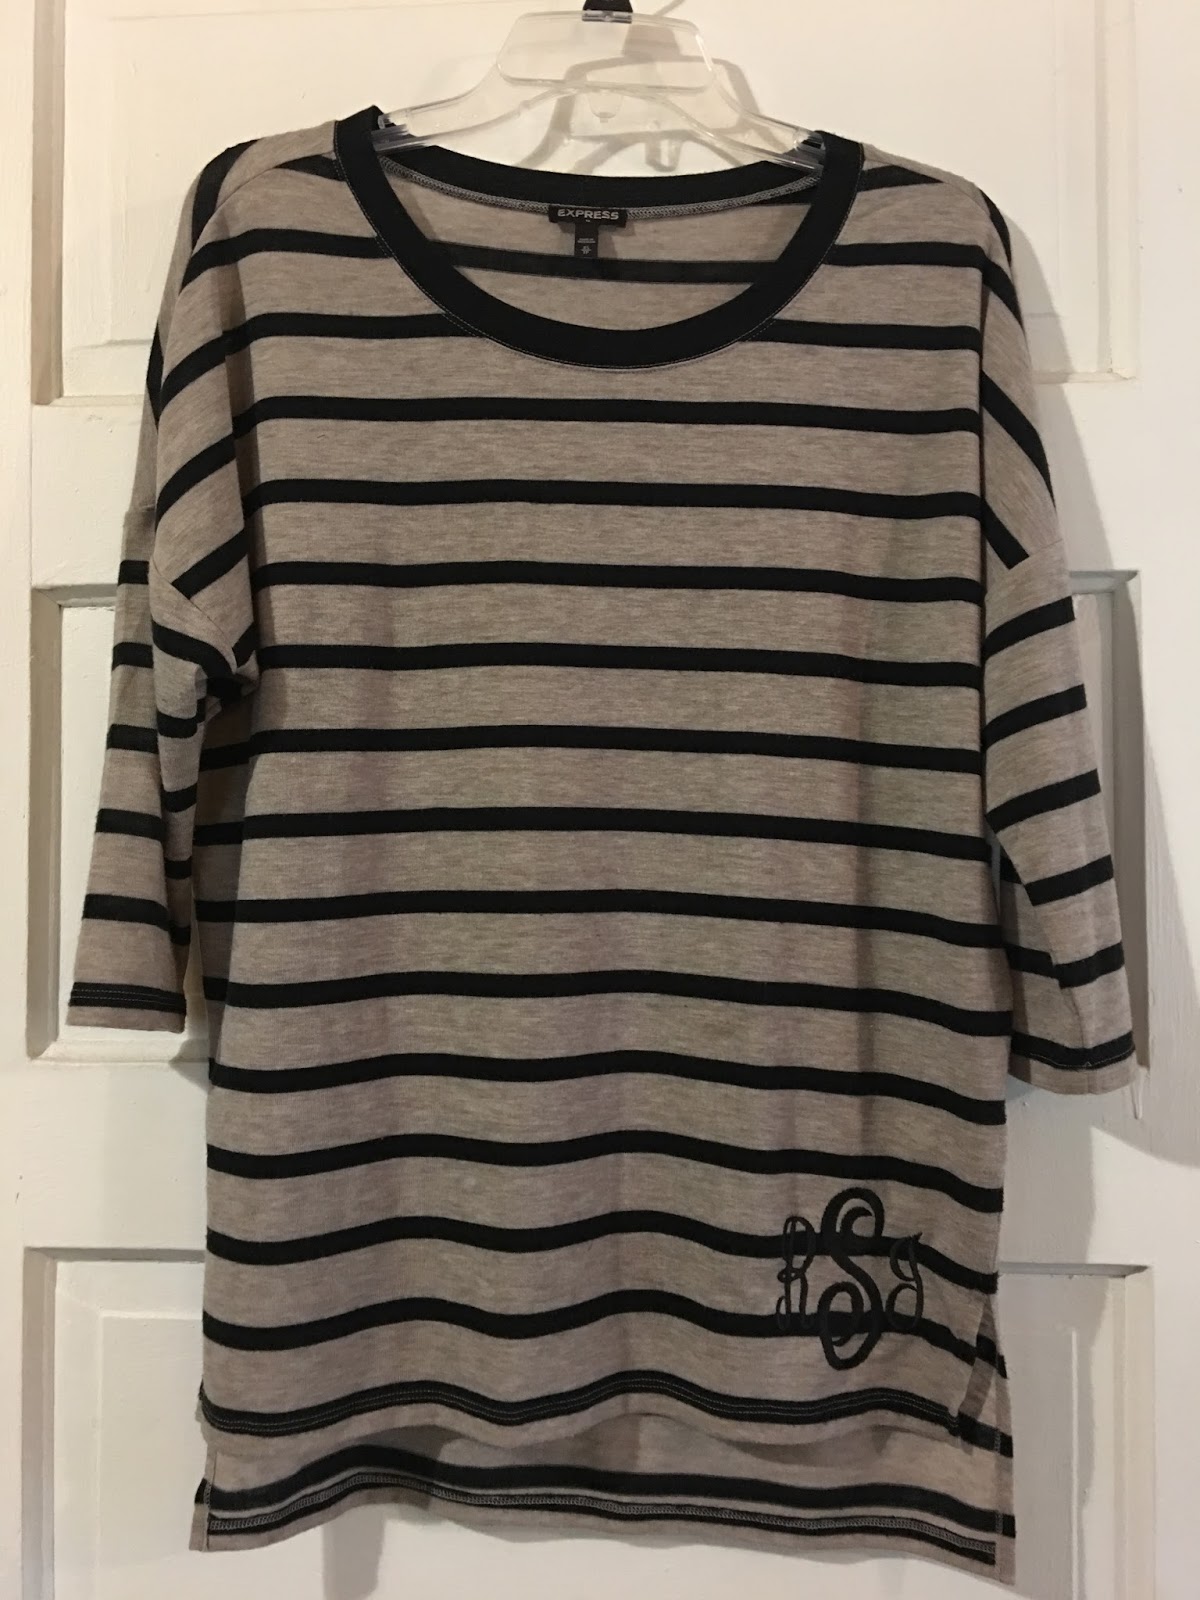 Marla, Plain and Small: Monogrammed Express Shirt